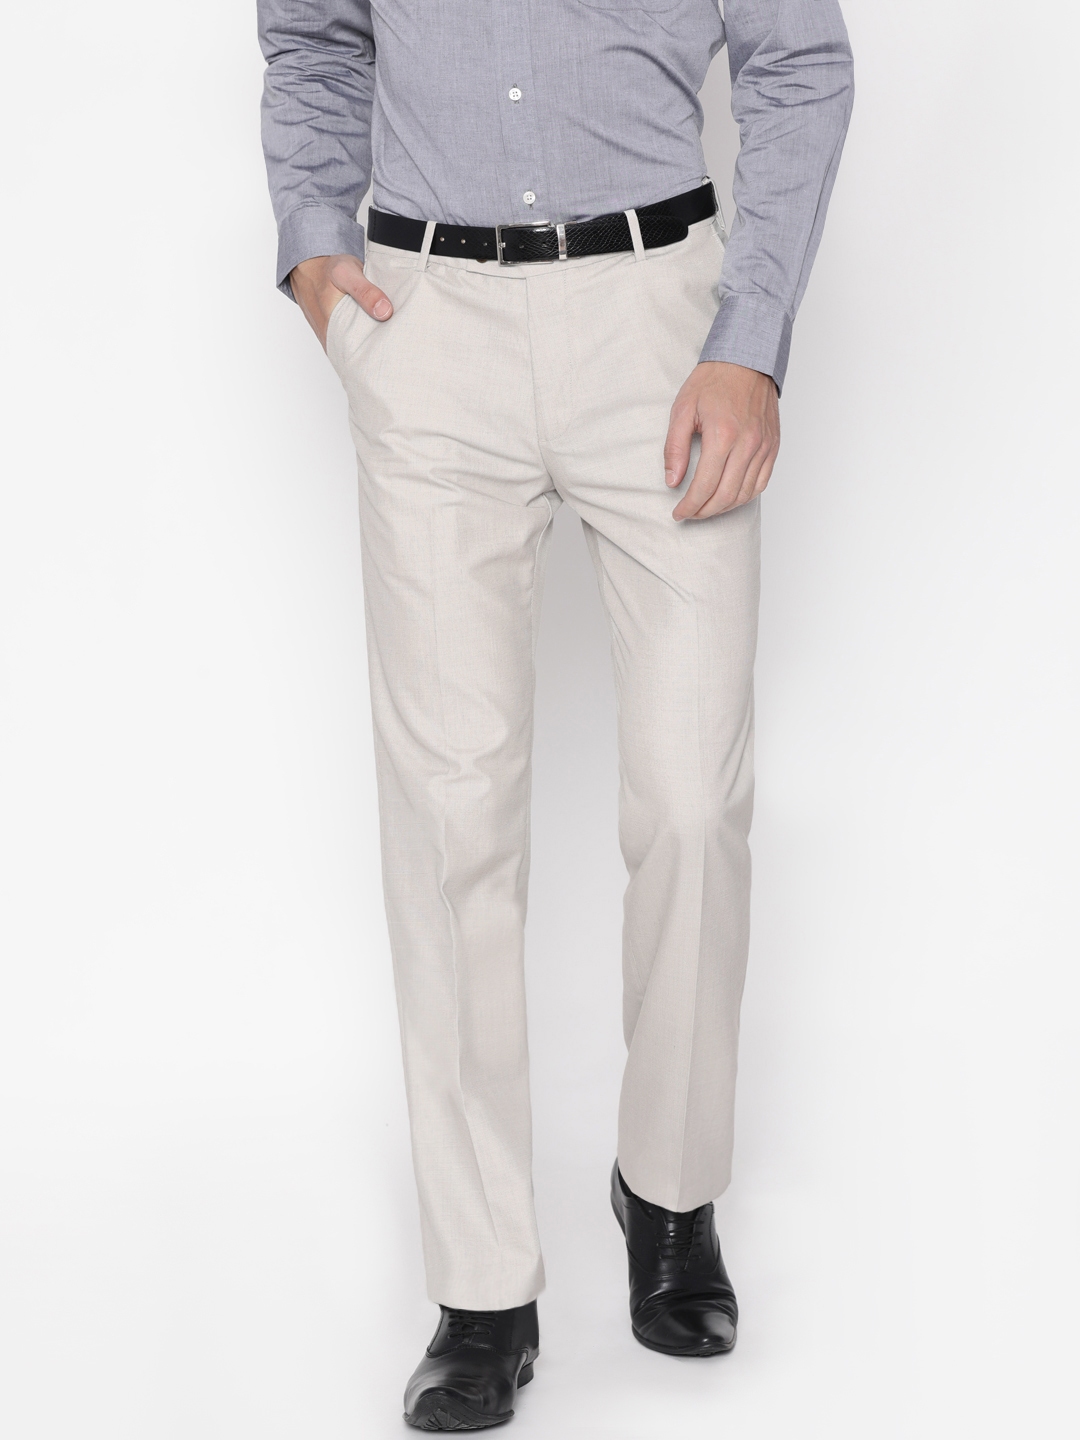 MANCREW Formal Pants For Men  Cream